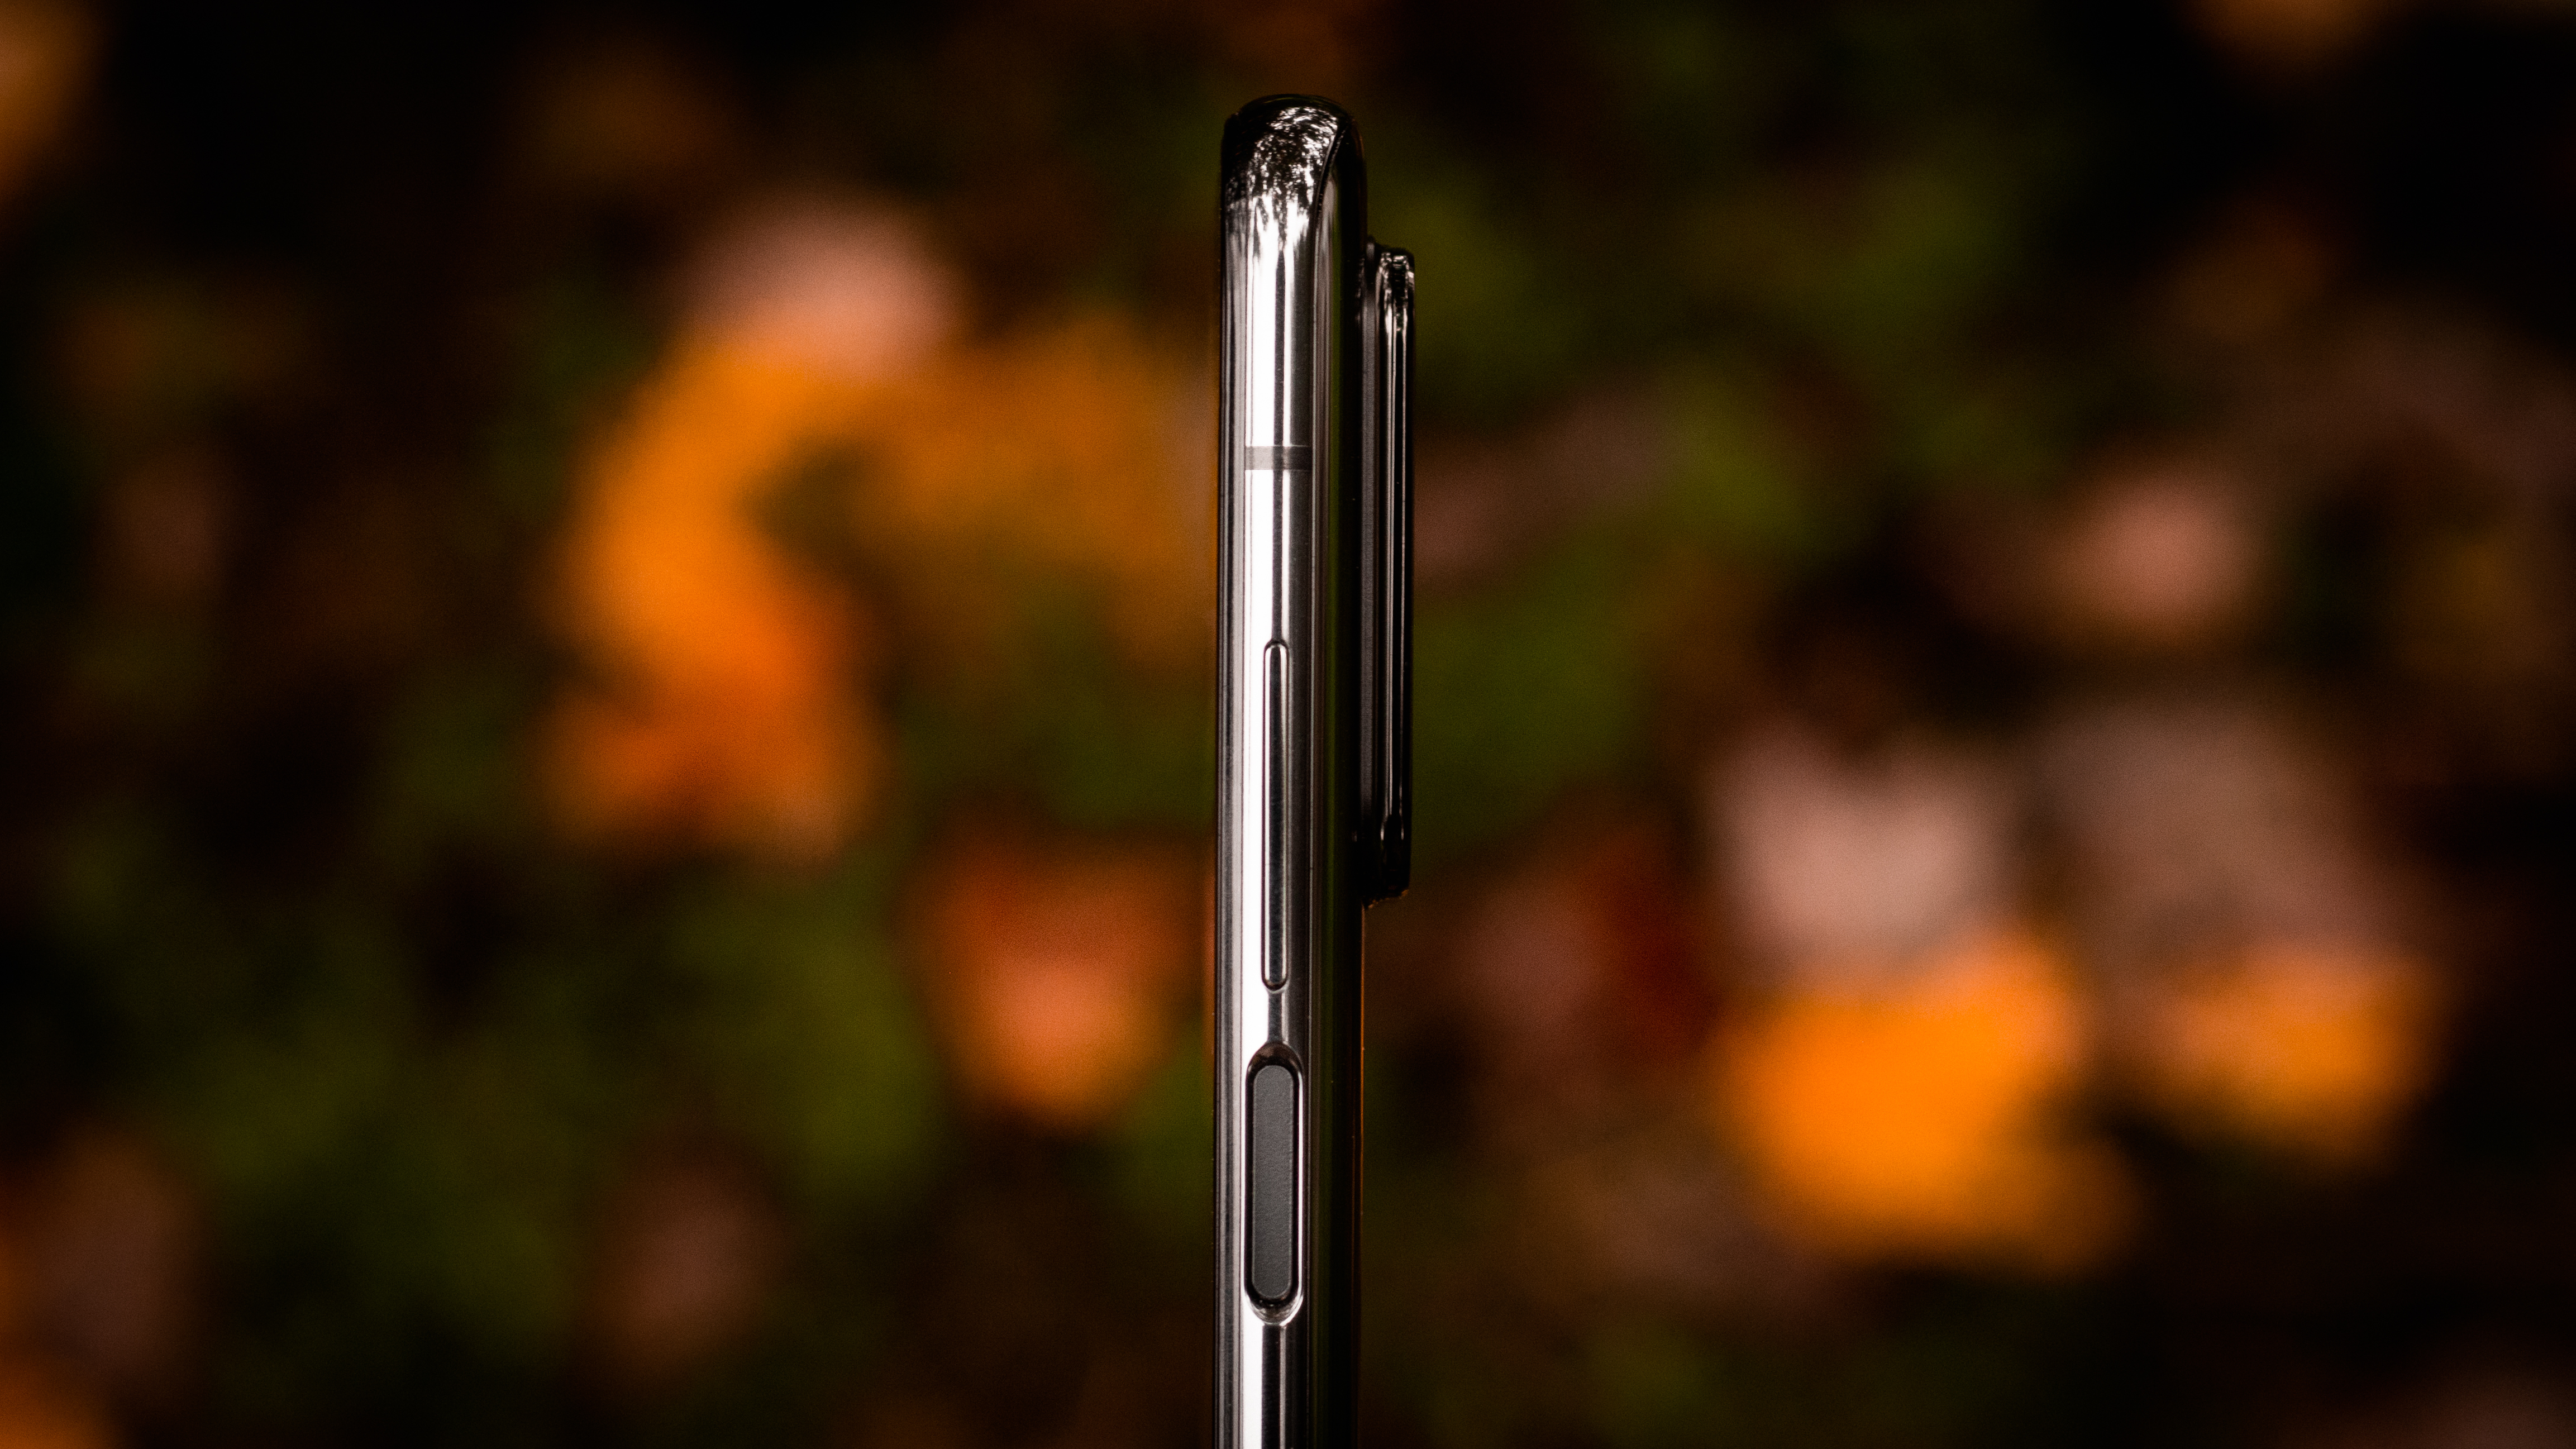 Xiaomi Mi 10T Pro fot. Miłosz Starzewski 